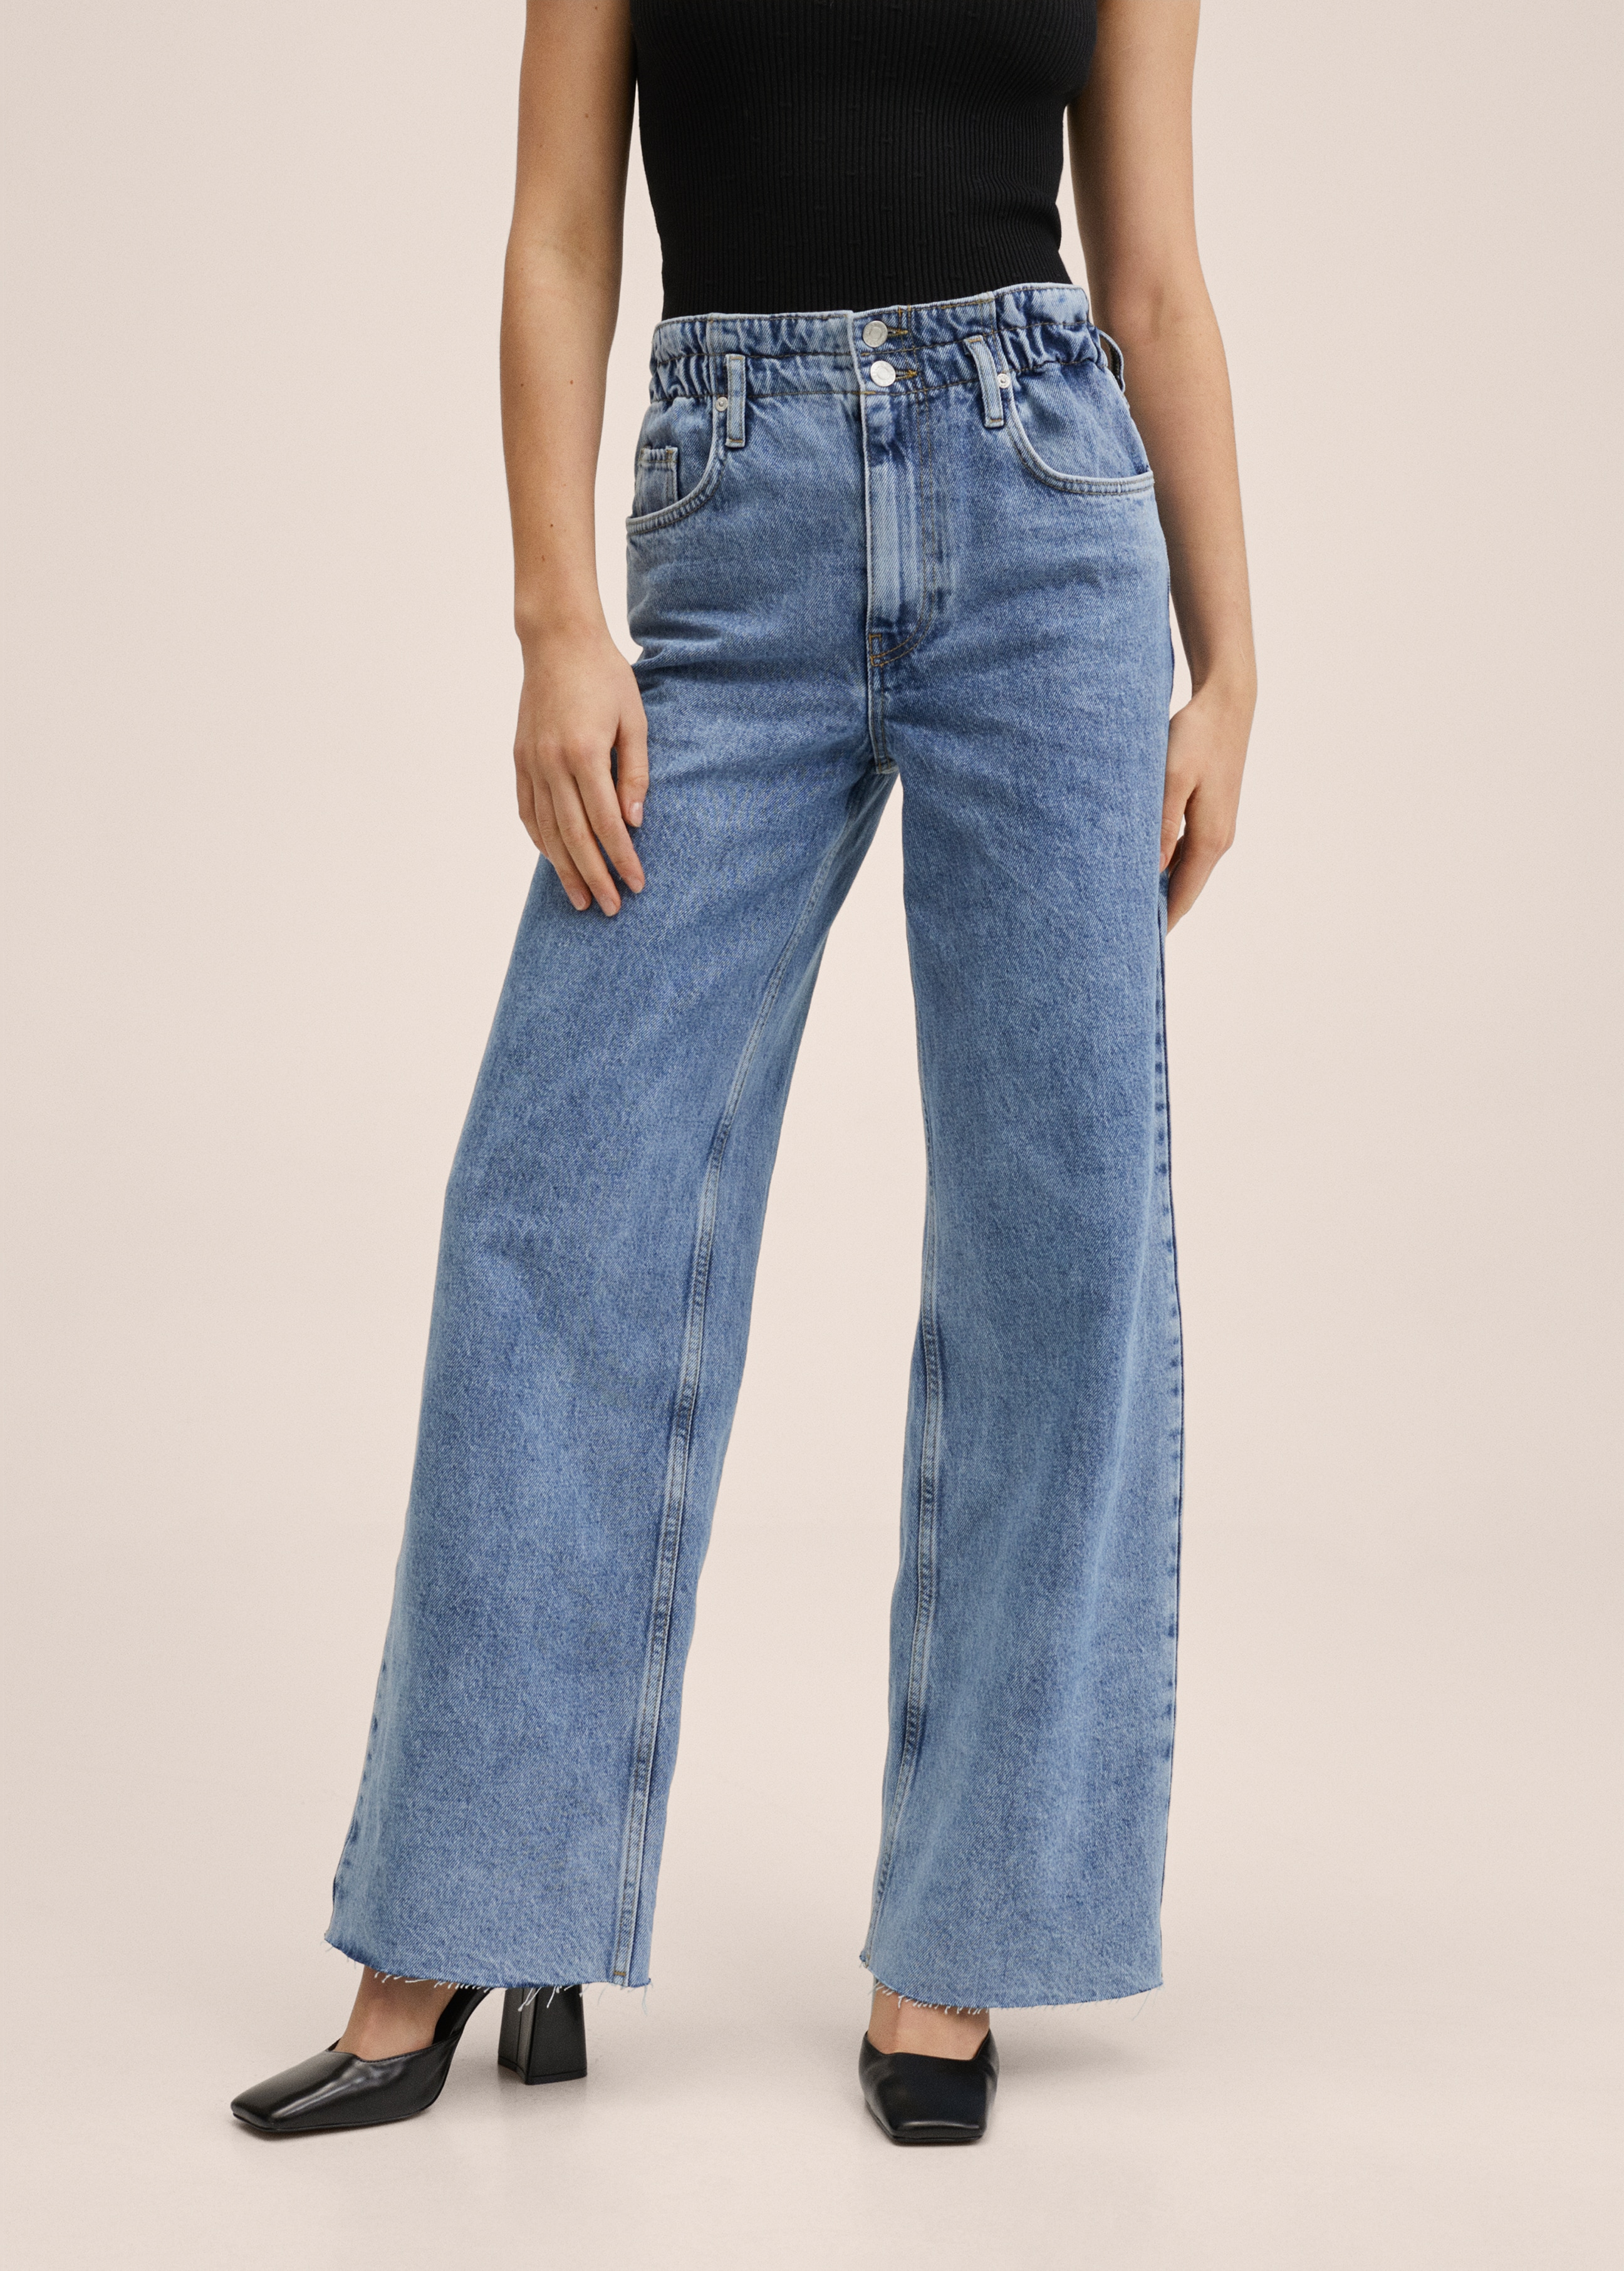 Wideleg elastic waist jeans - Medium plane